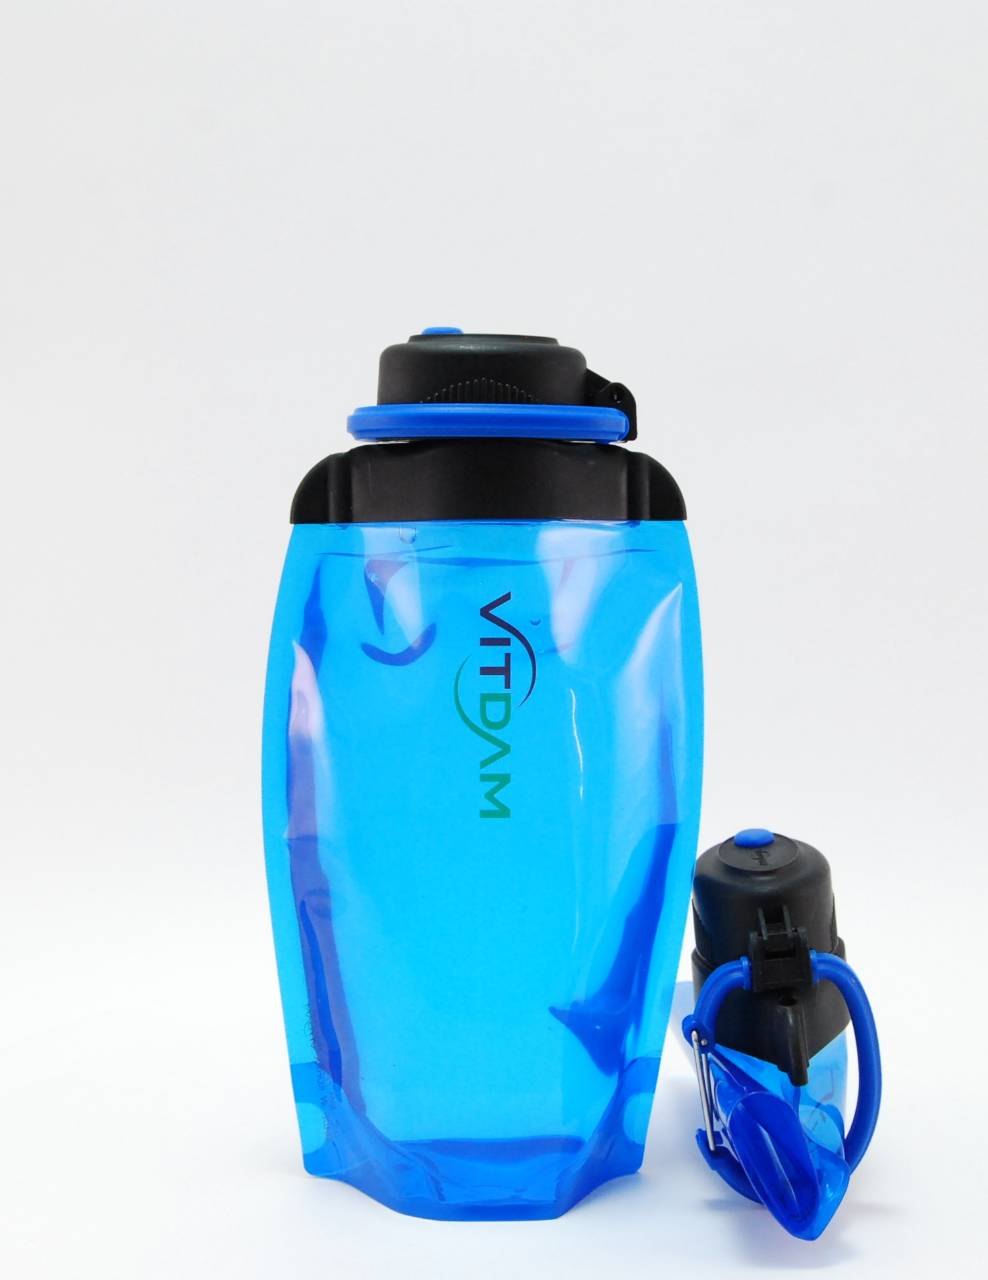 Складные бутылки для воды. Эко-бутылка 500 мл. Складная бутылка. Складная бутылка для воды. Бутылка для спортсменов.